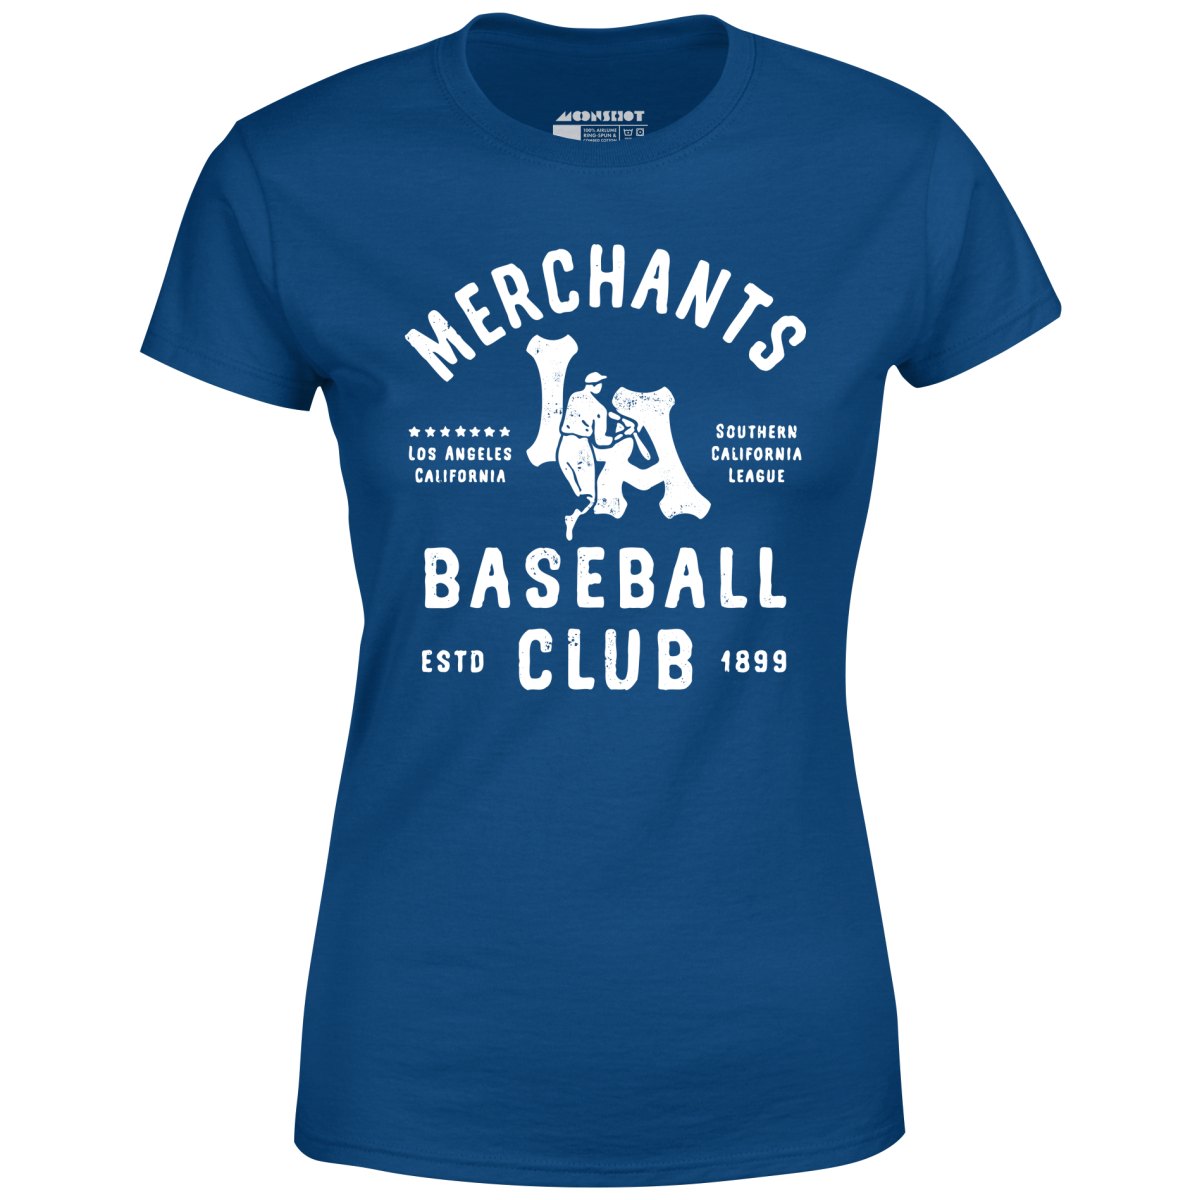 Los Angeles Merchants - California - Vintage Defunct Baseball Teams - Women's T-Shirt